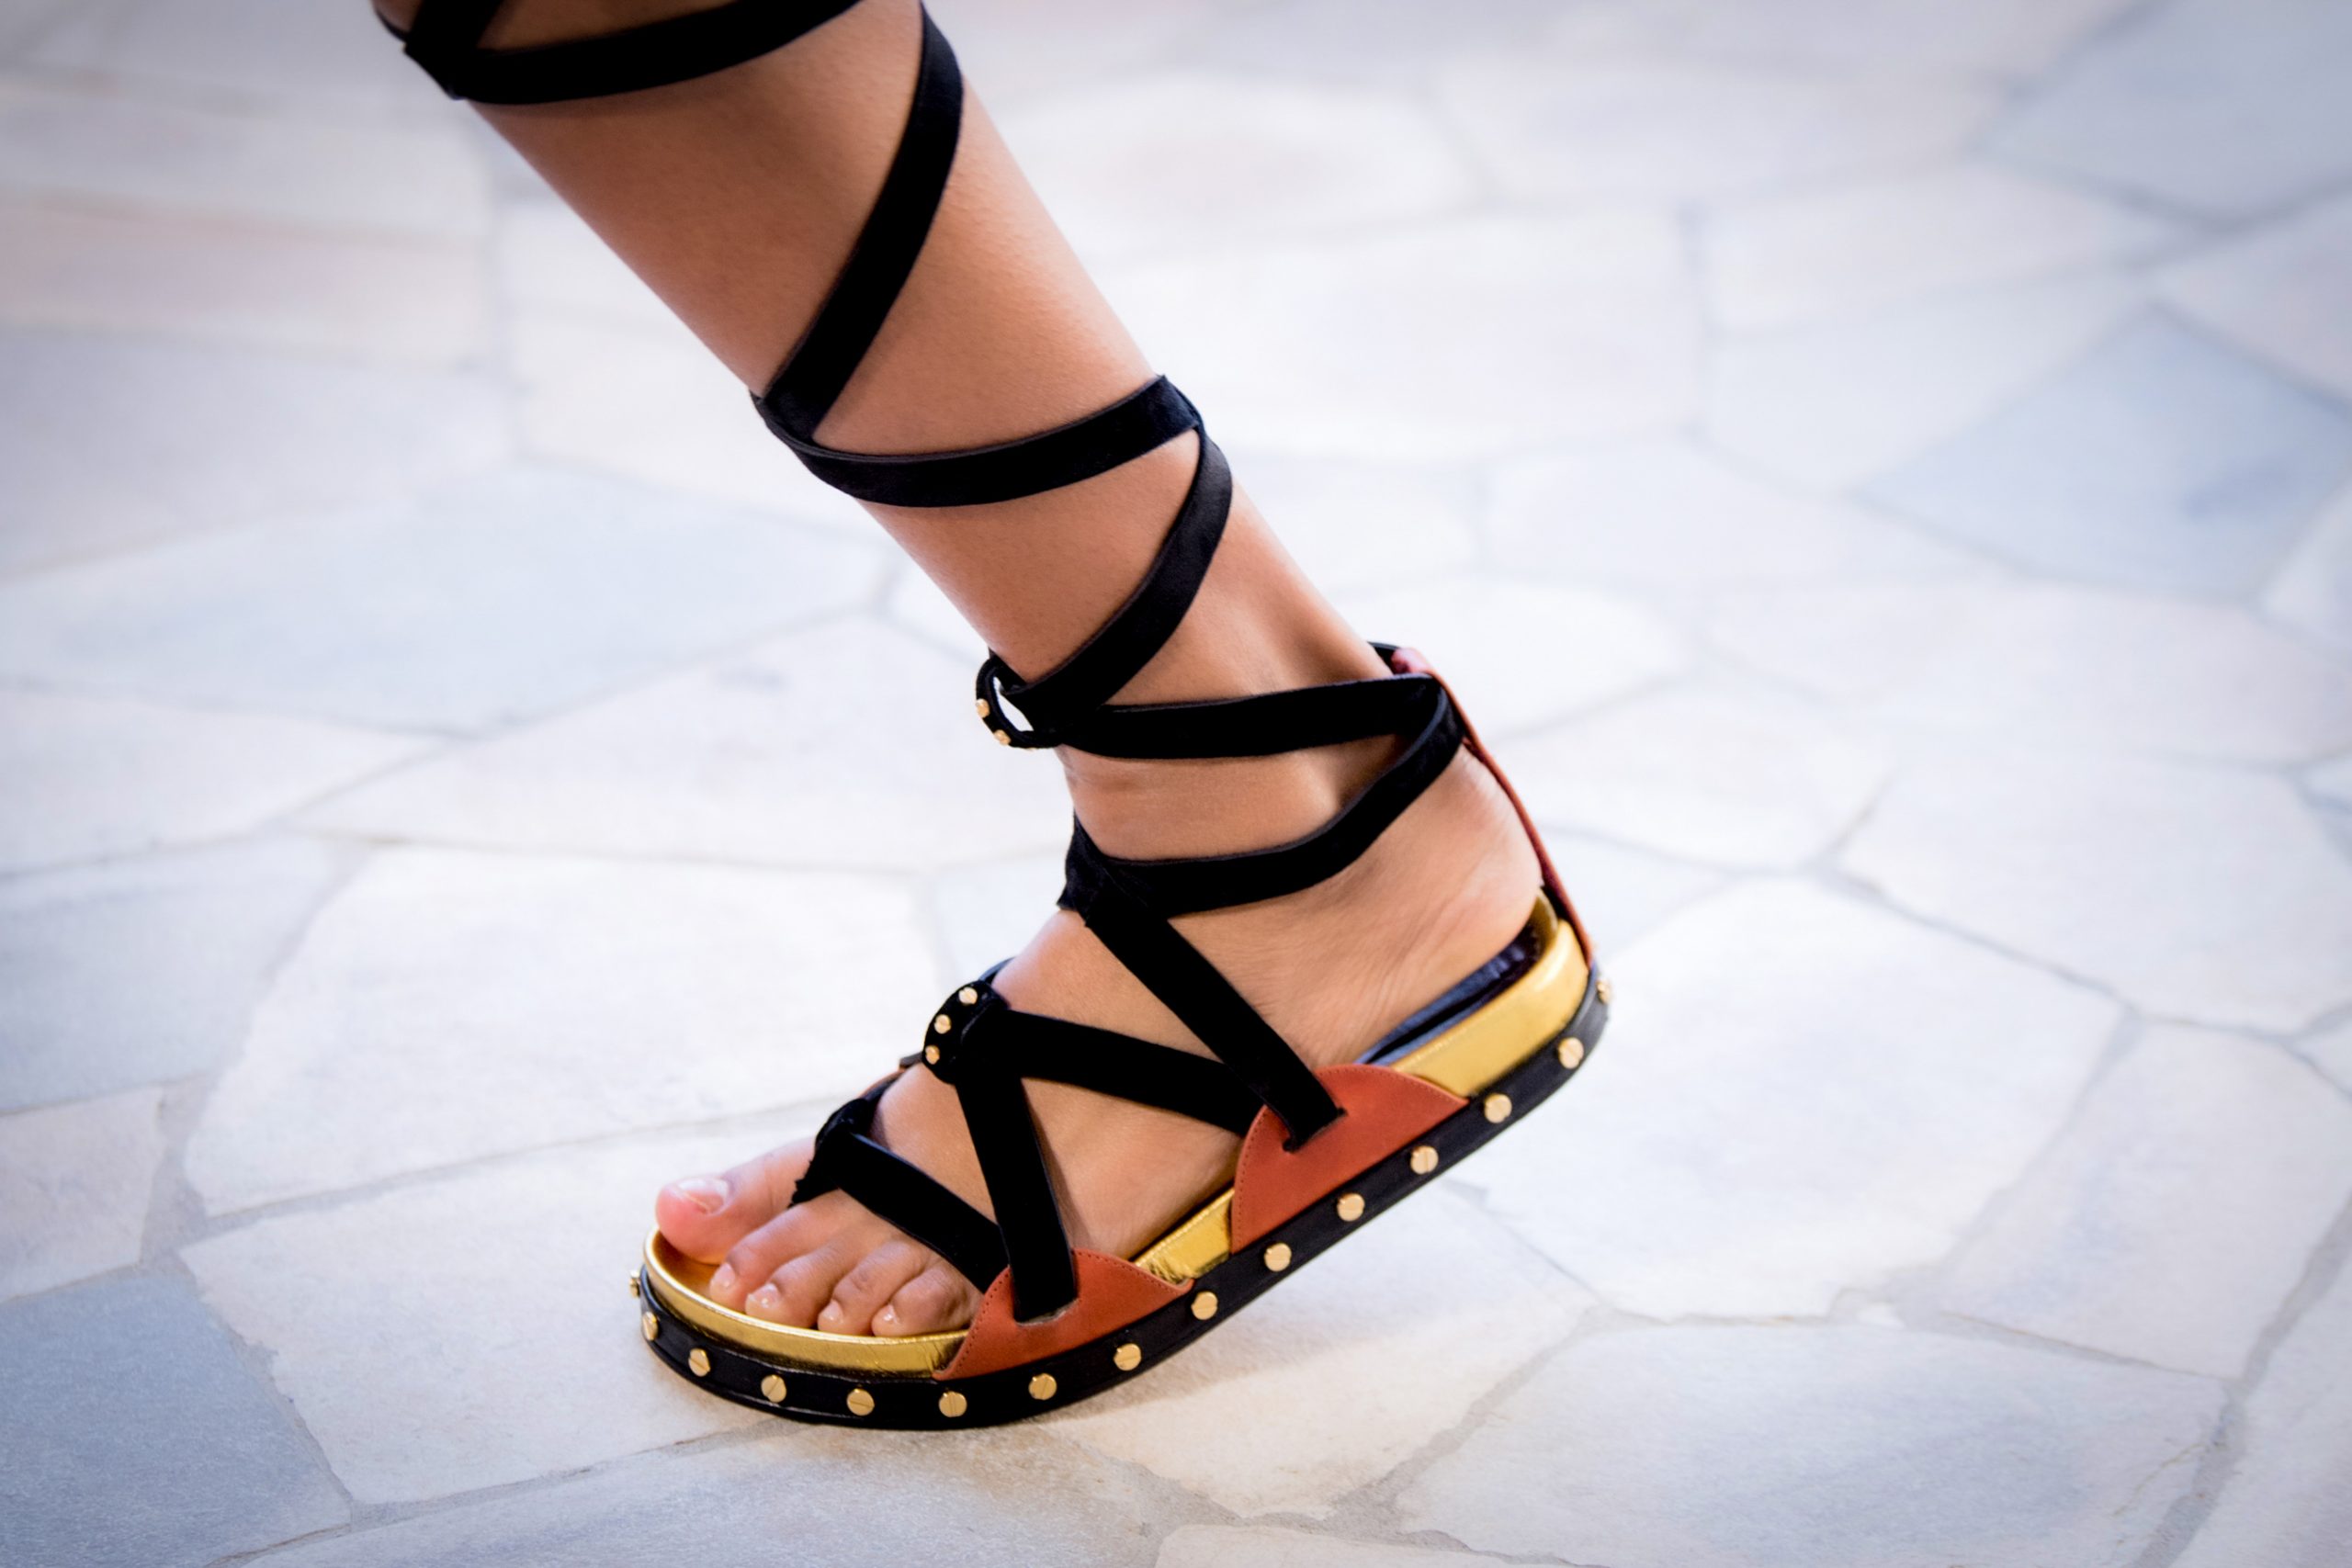 Sandals 2021 Trend